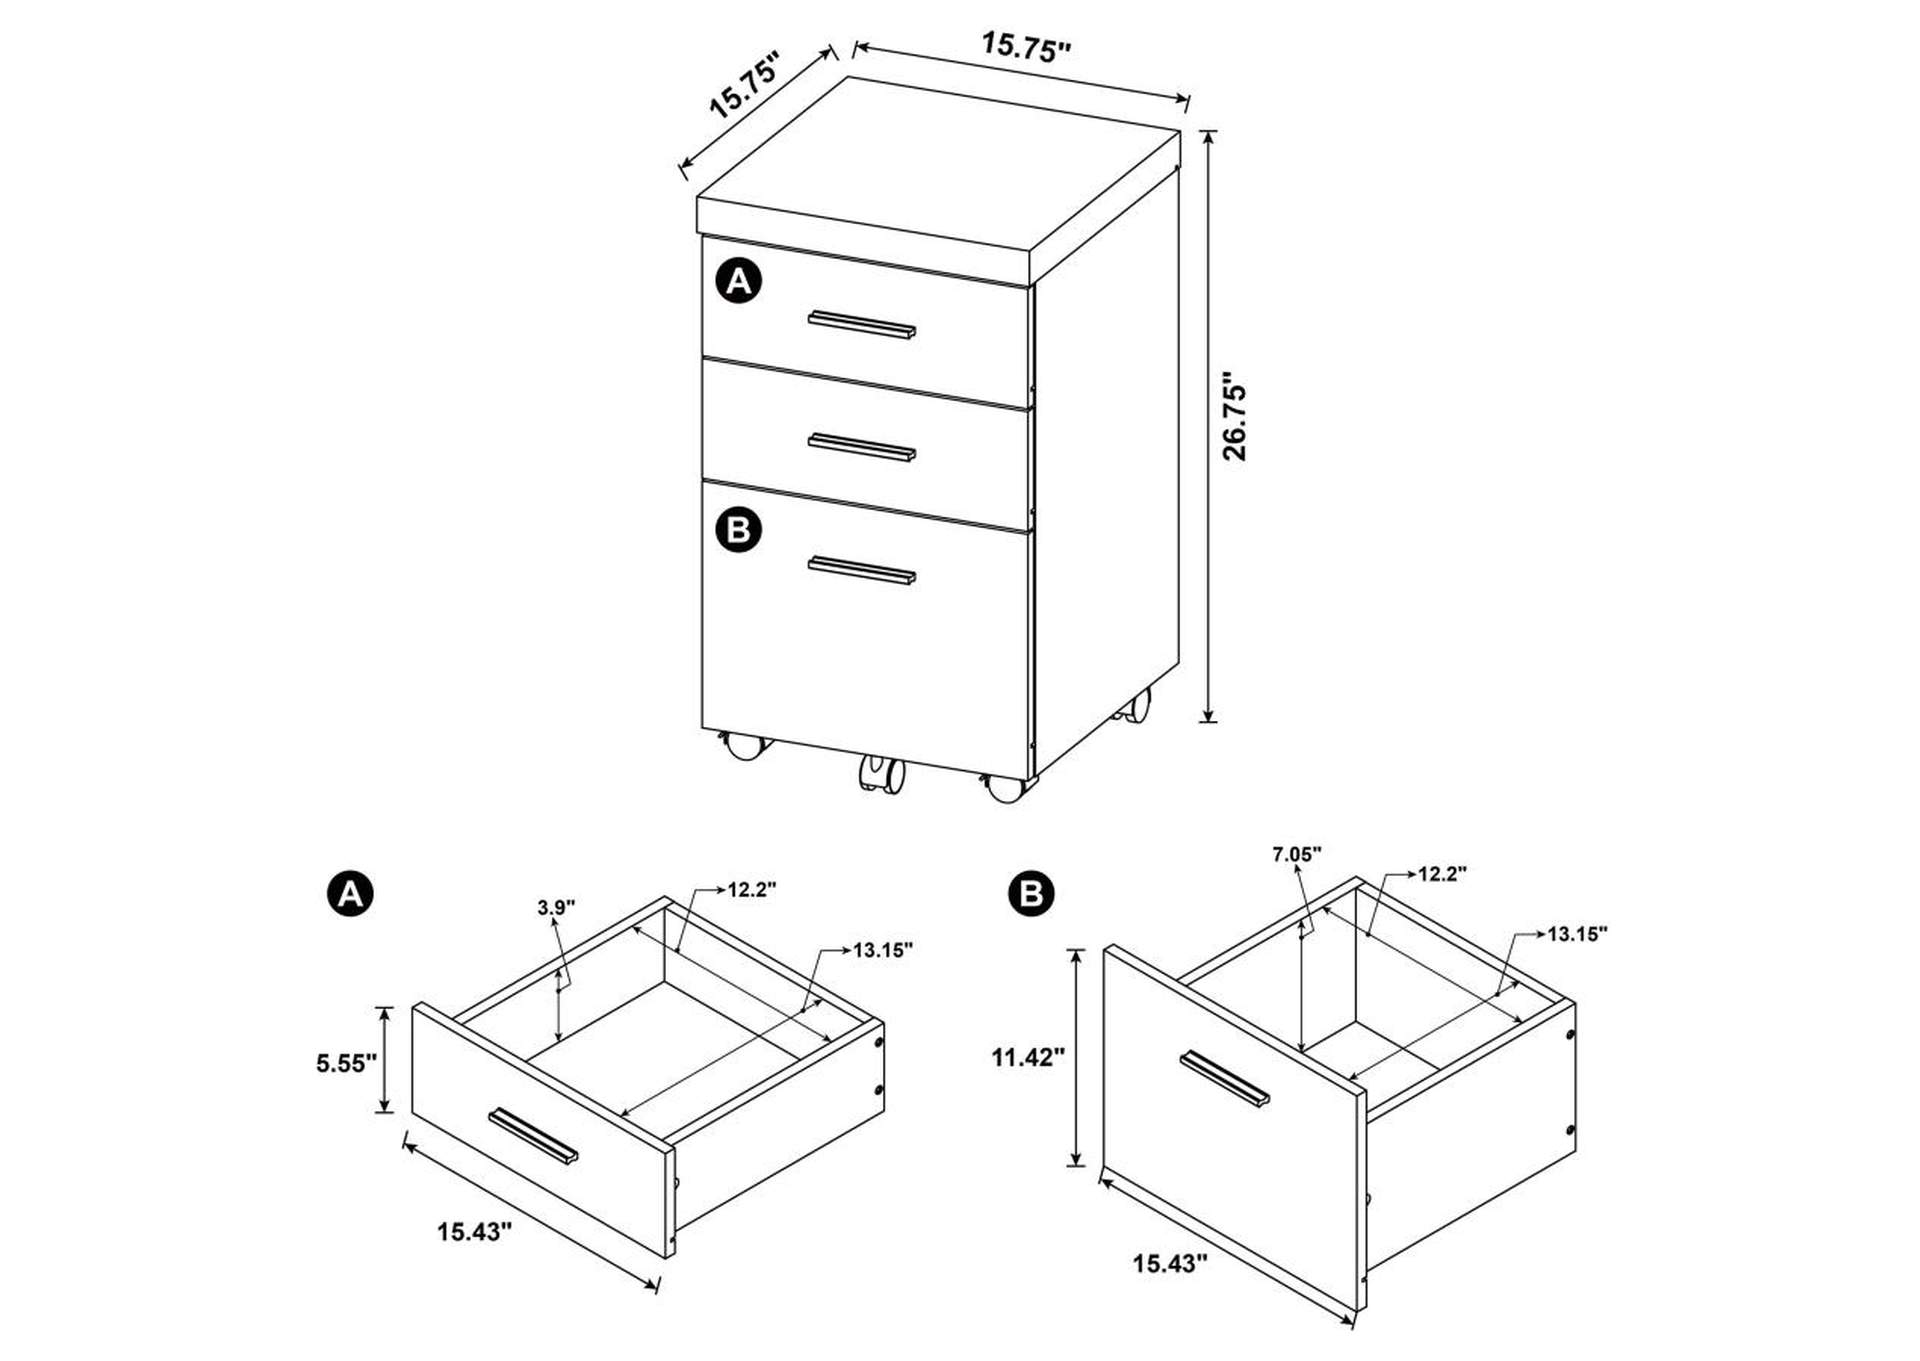 Skeena 3 - drawer Mobile Storage Cabinet Cappuccino,Coaster Furniture